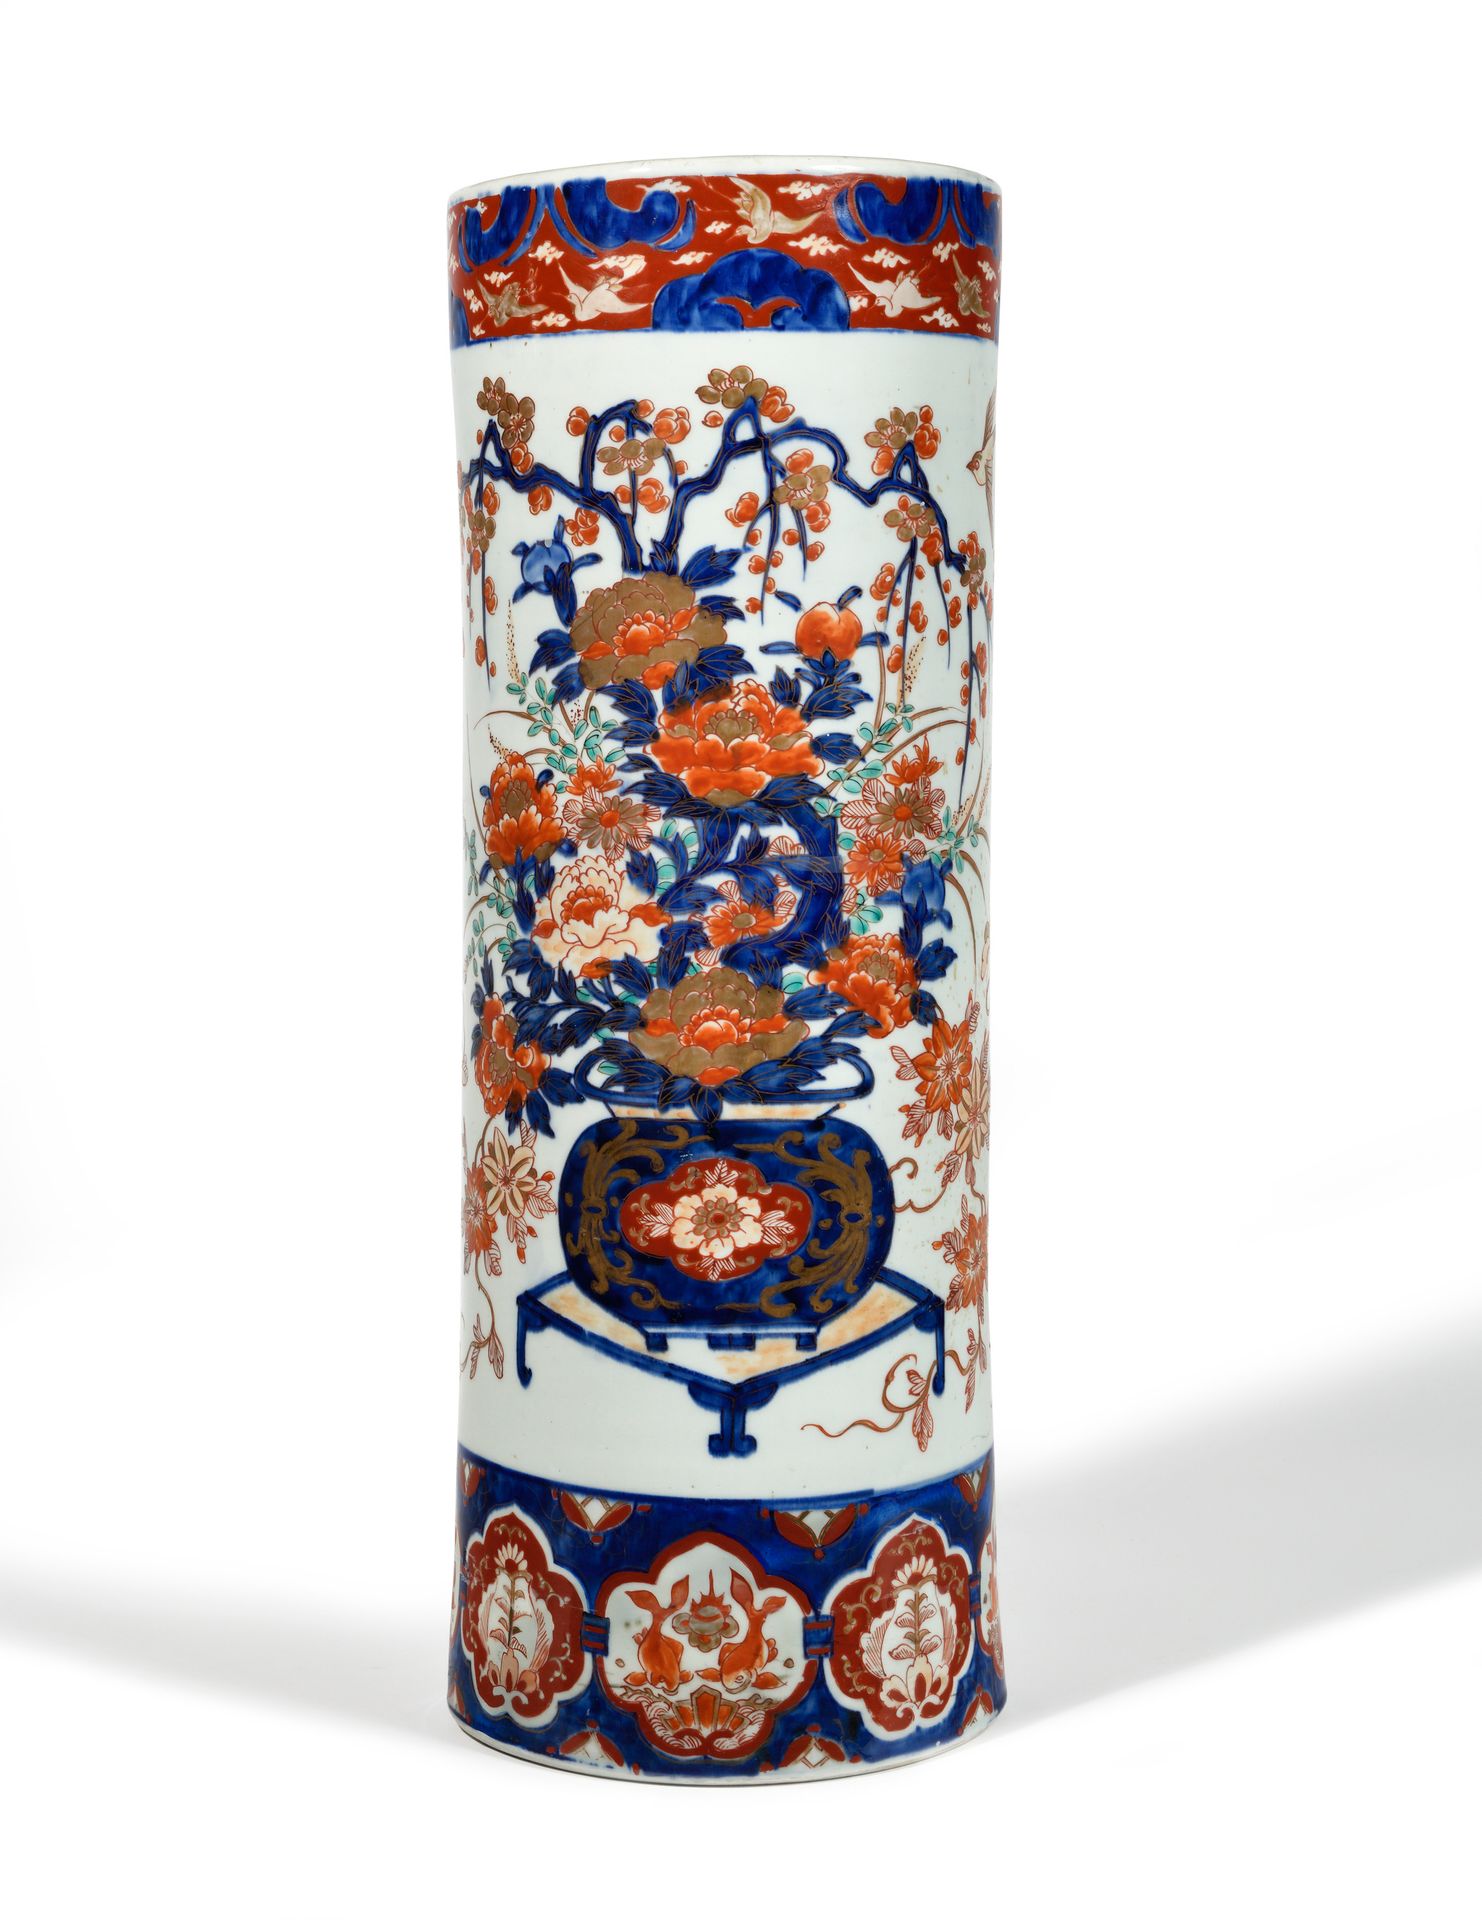 Null TUBULAR UMBRELLA STAND
in glazed ceramic in the Imari style. 
19th century.&hellip;